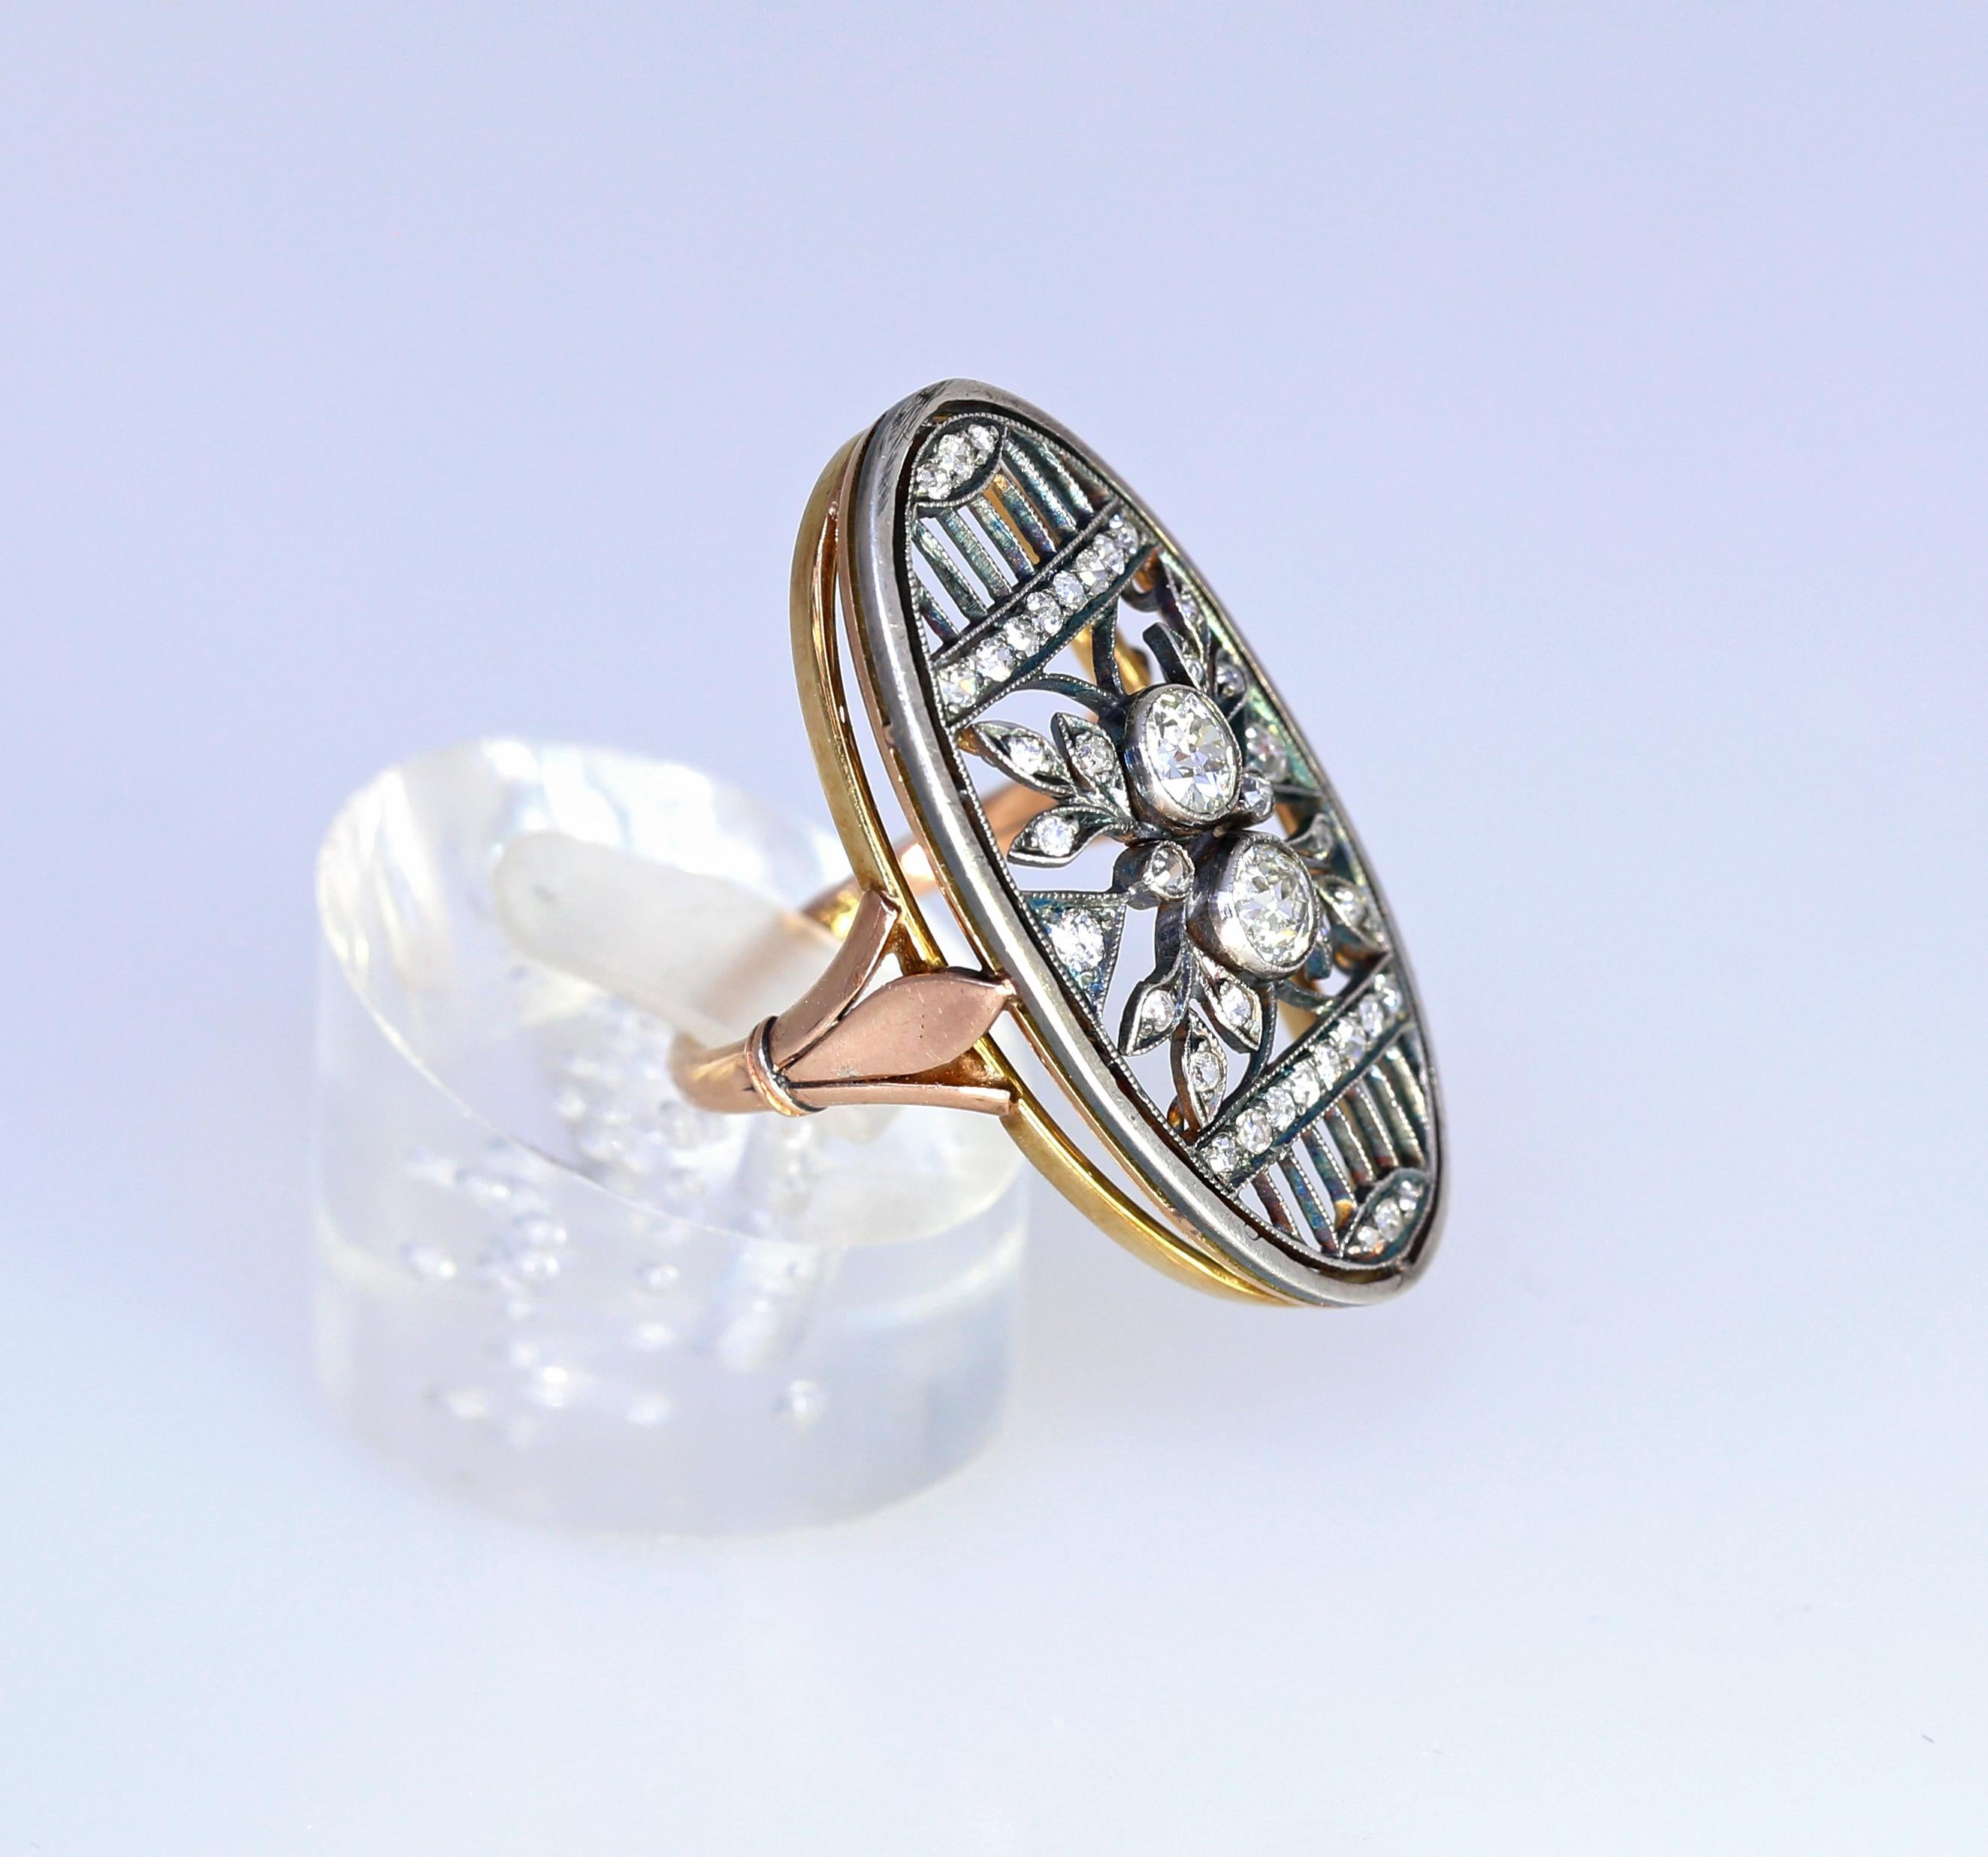 Women's Art Nouveau Russian Diamond Ring Gold Silver, 1890